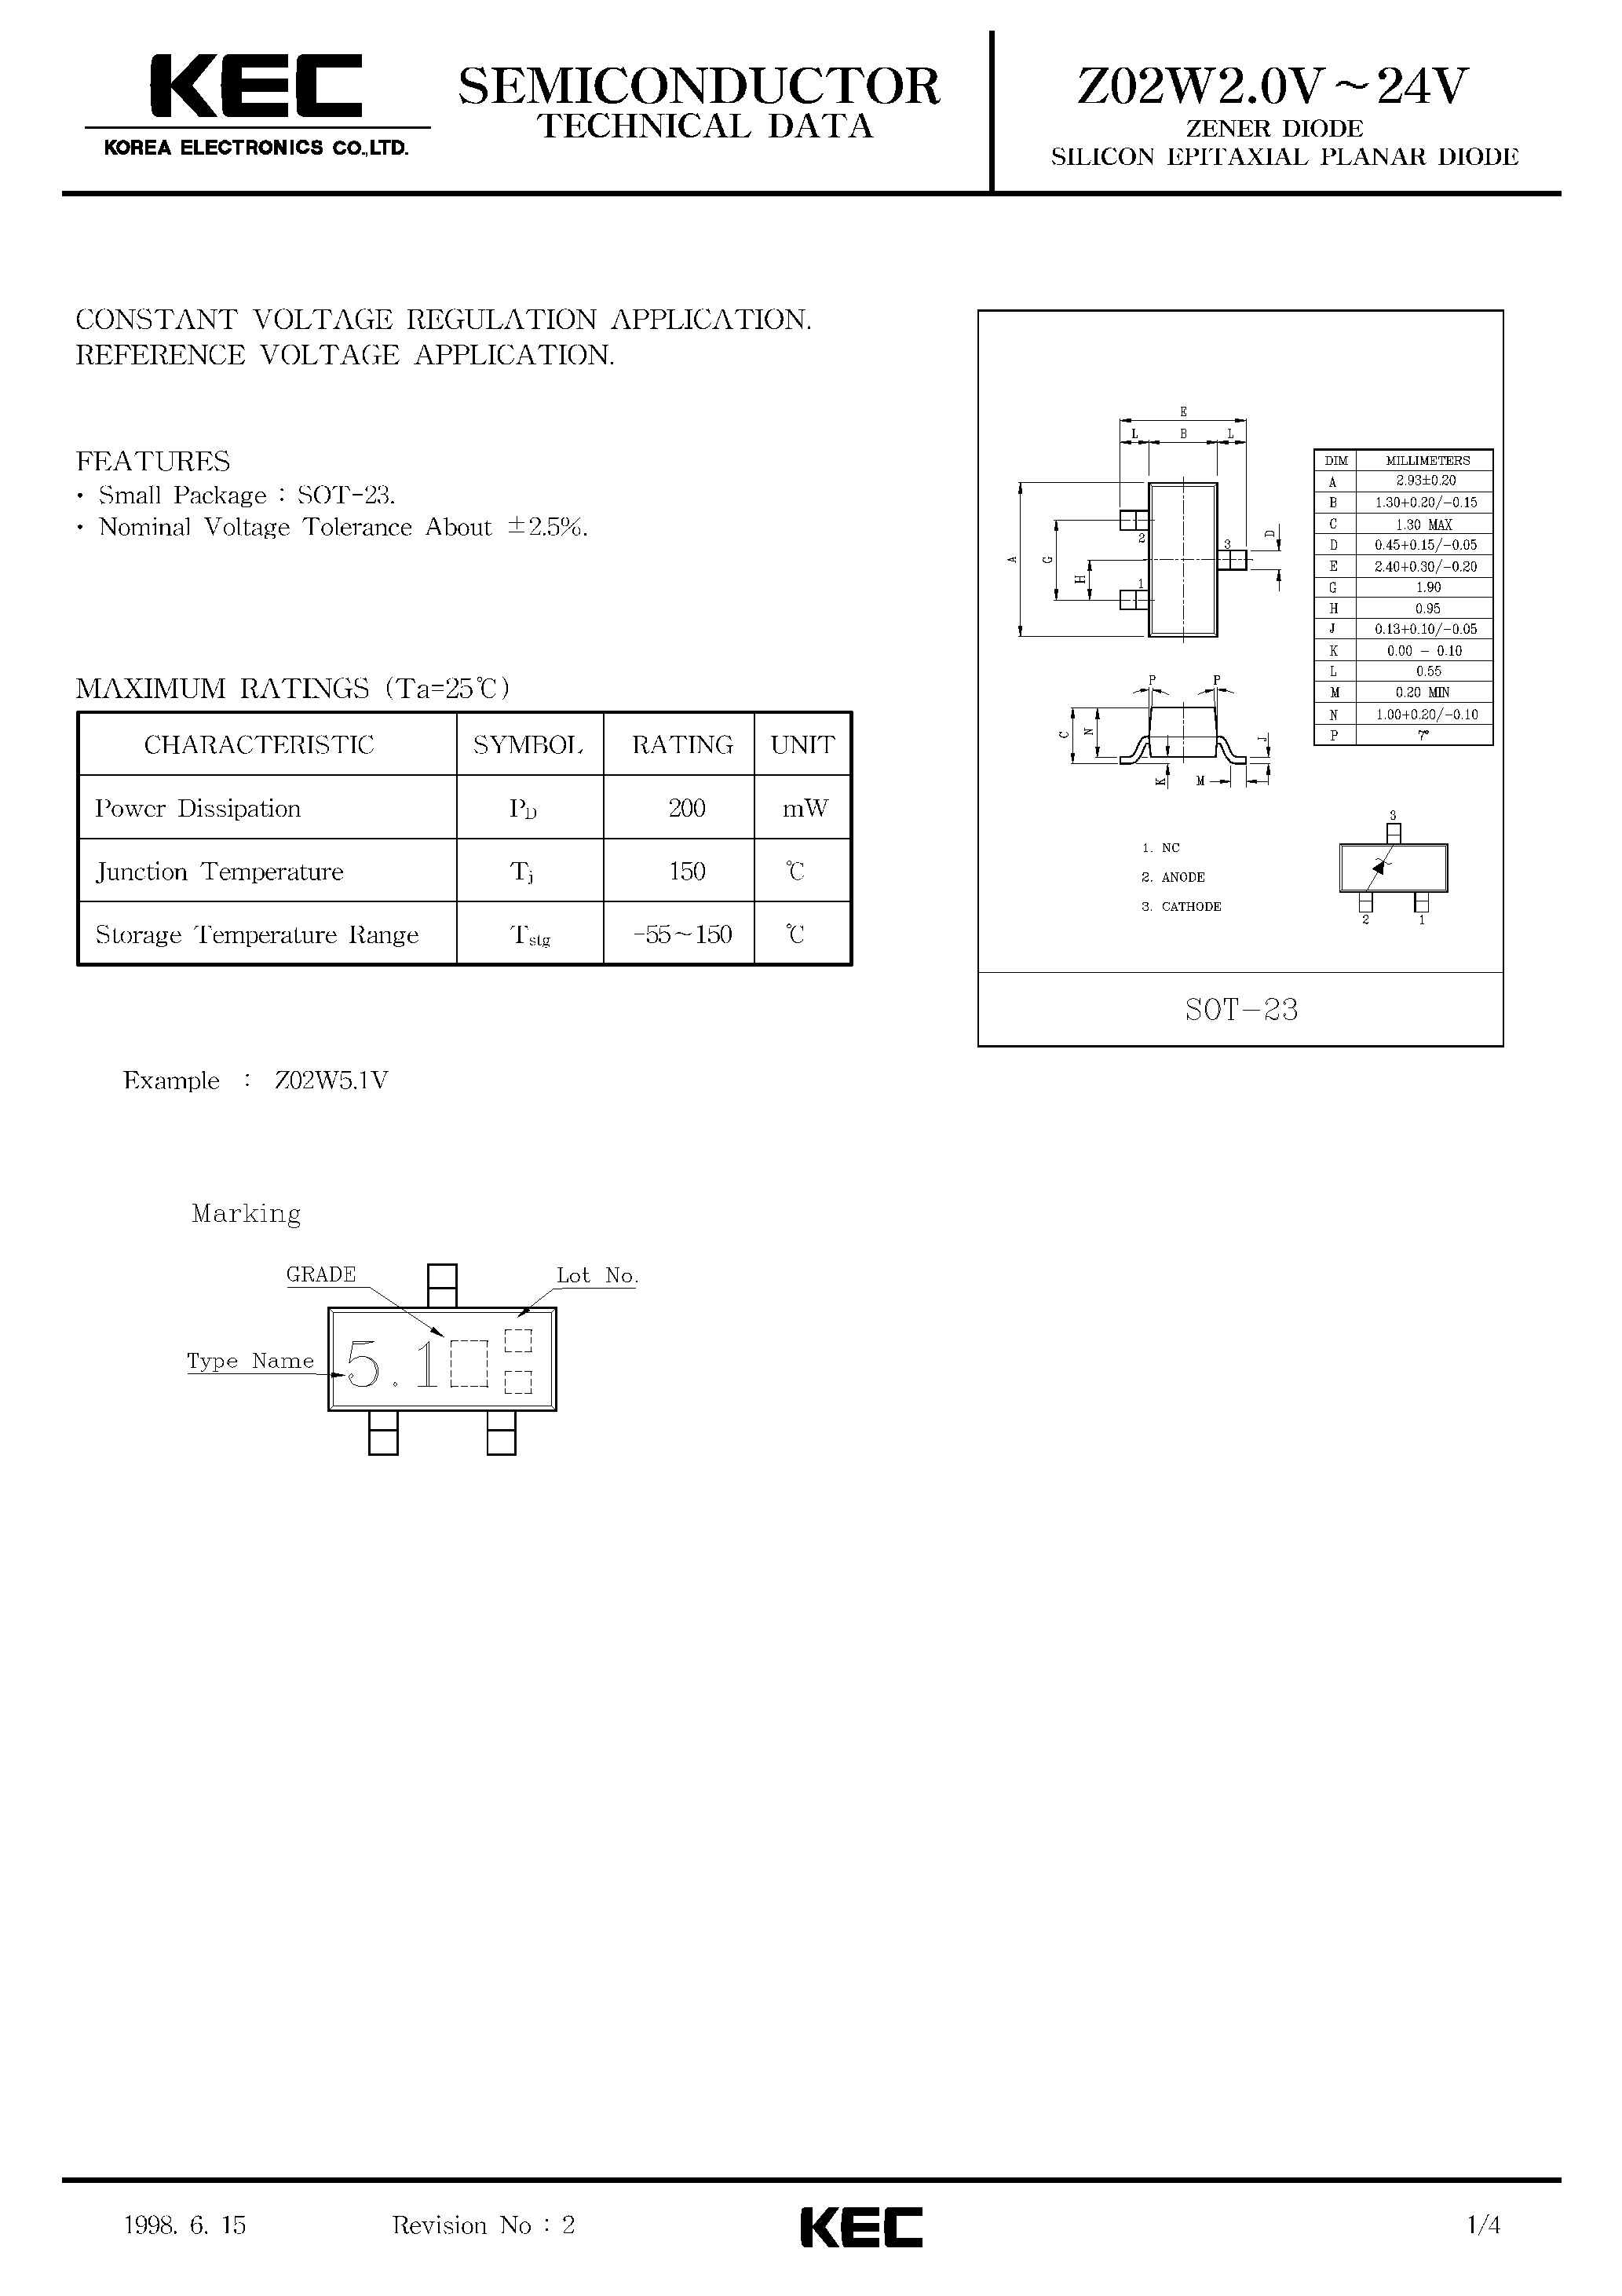 Datasheet Z02W12V - ZENER DIODE SILICON EPITAXIAL PLANAR DIODE (CONSTANT VOLTAGE REGULATION/ REFERENCE VOLTAGE) page 1